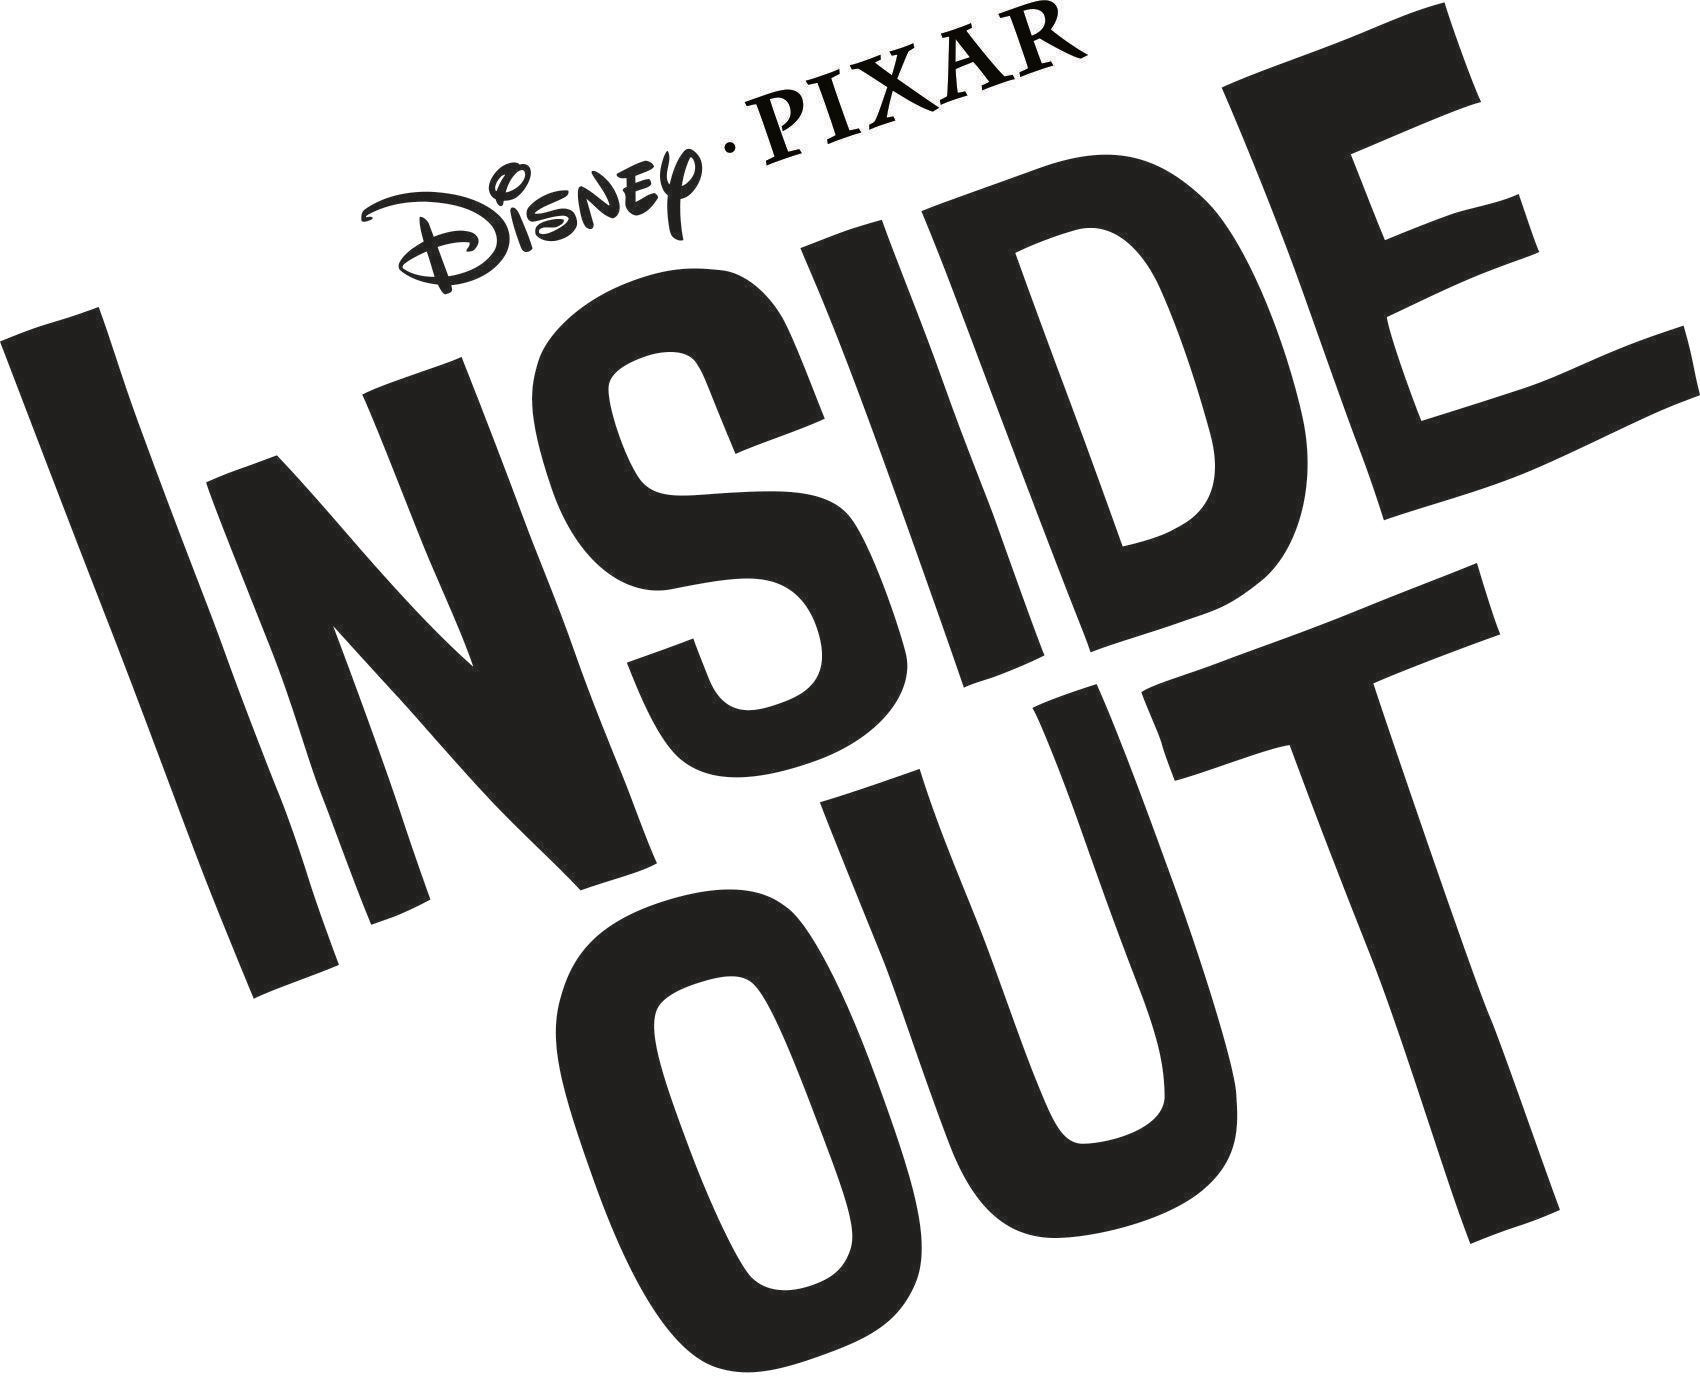 Disney Pixar Inside Out Logo - Inside Out/Gallery | Inside Out Wikia | FANDOM powered by Wikia